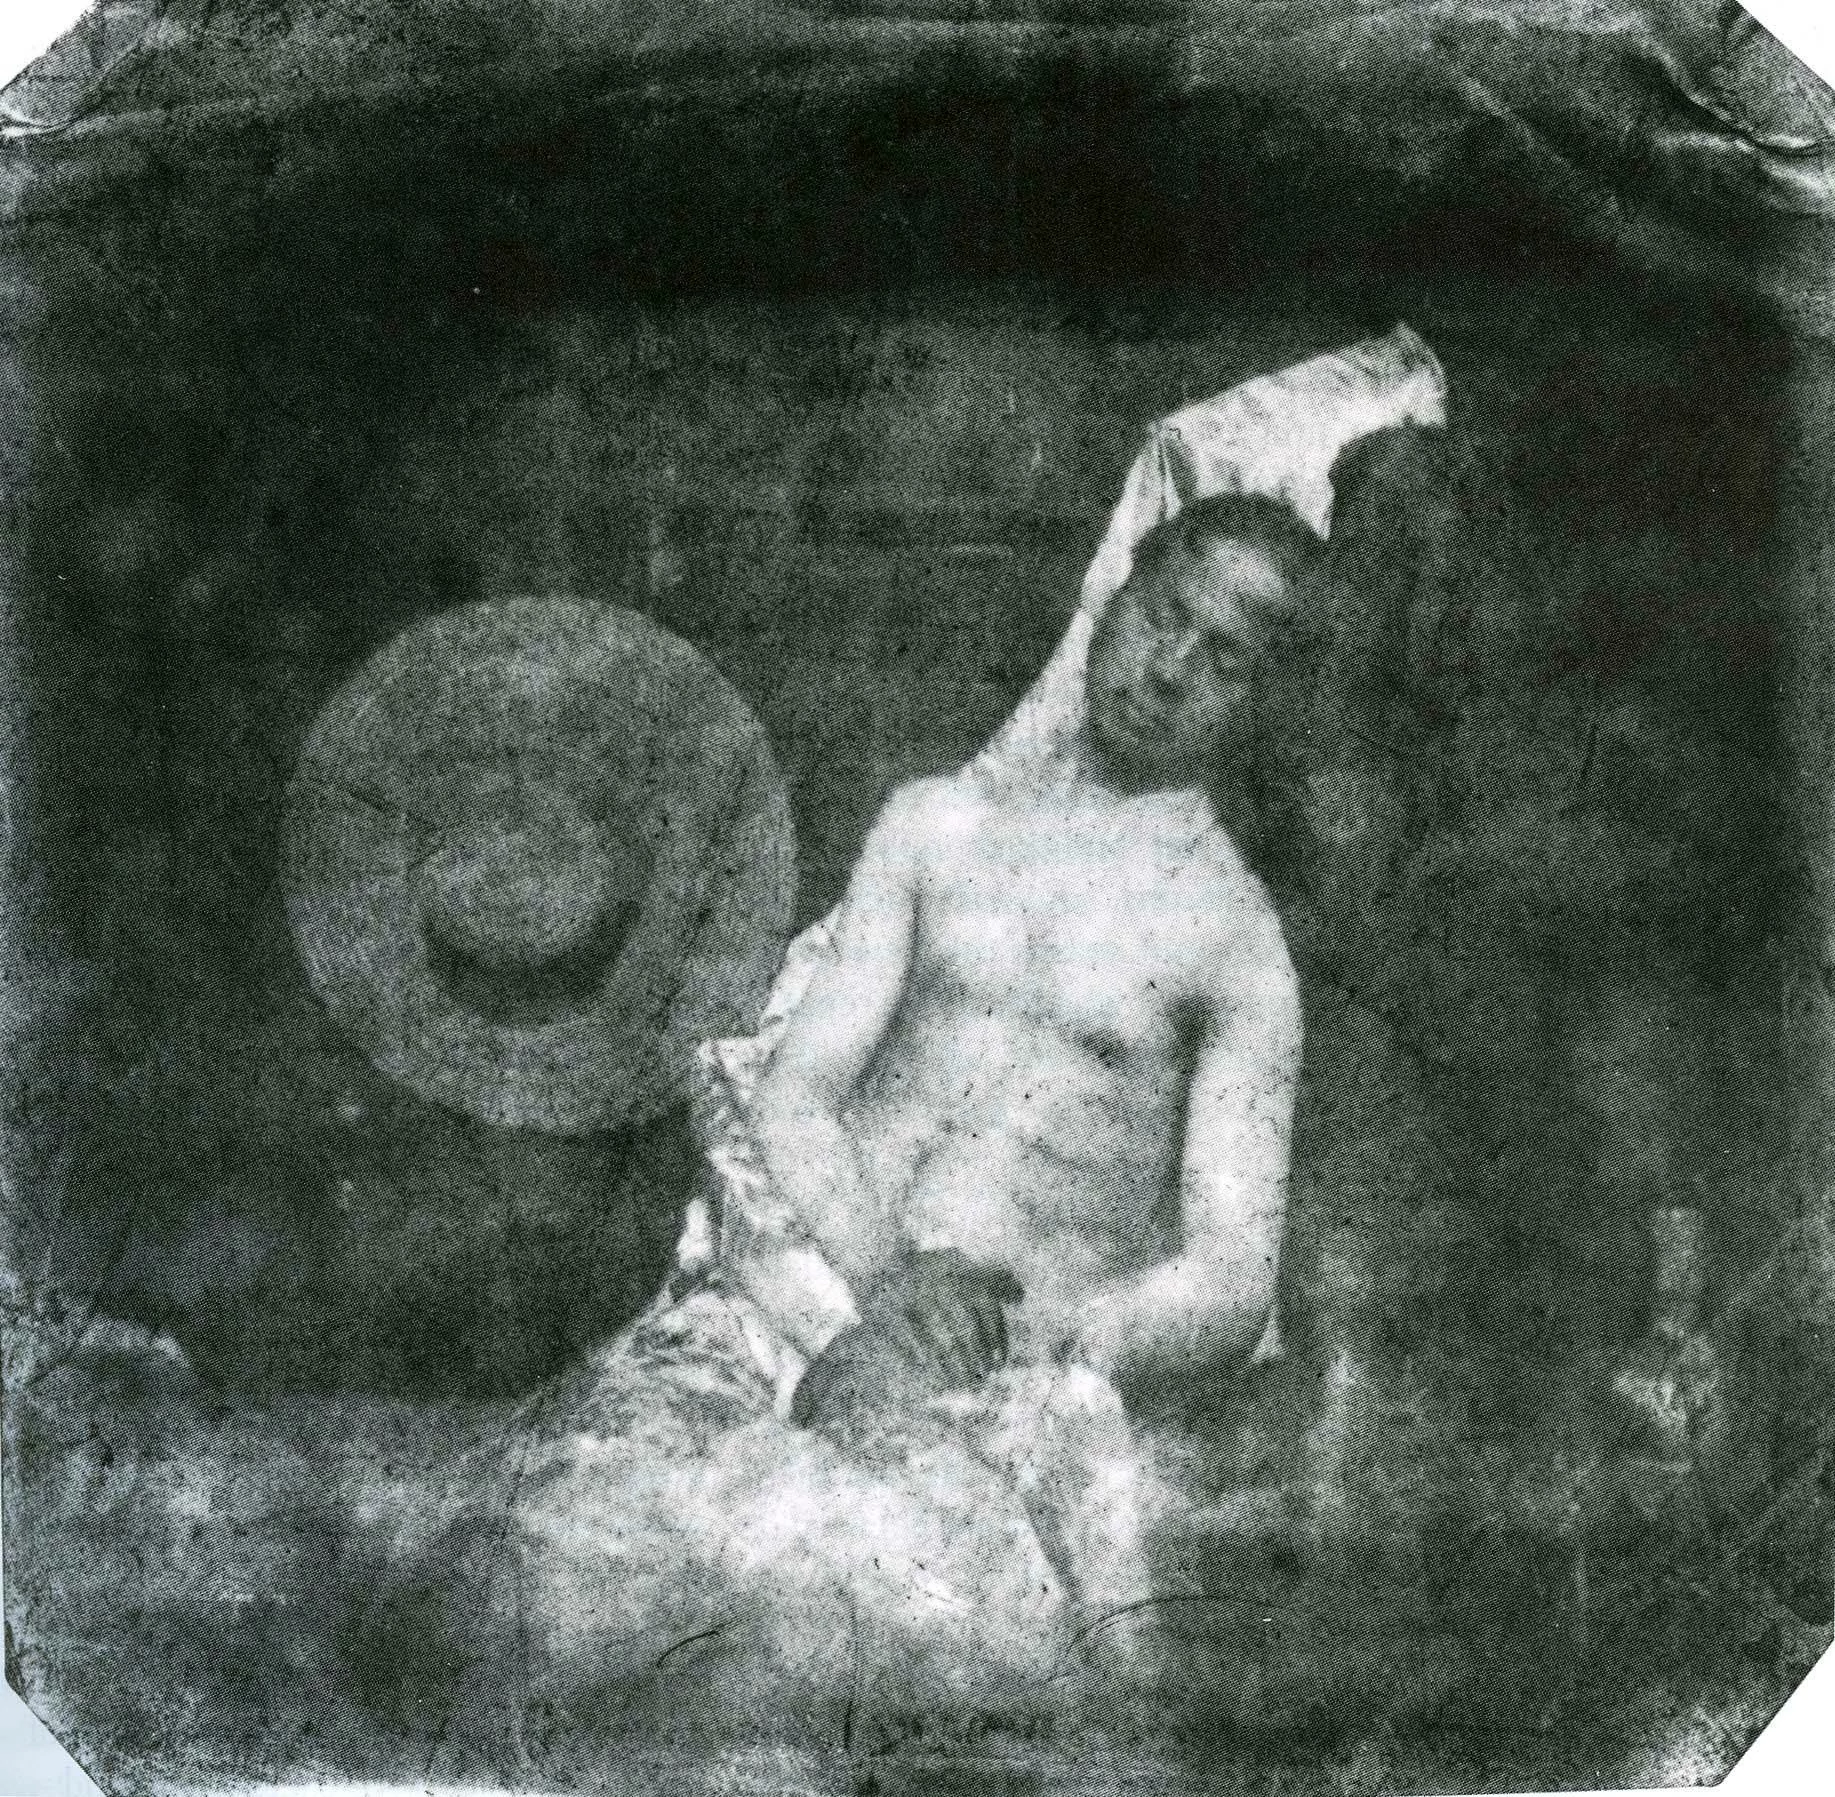 Self-Portrait as Drowned Man, Hippolyte Bayard